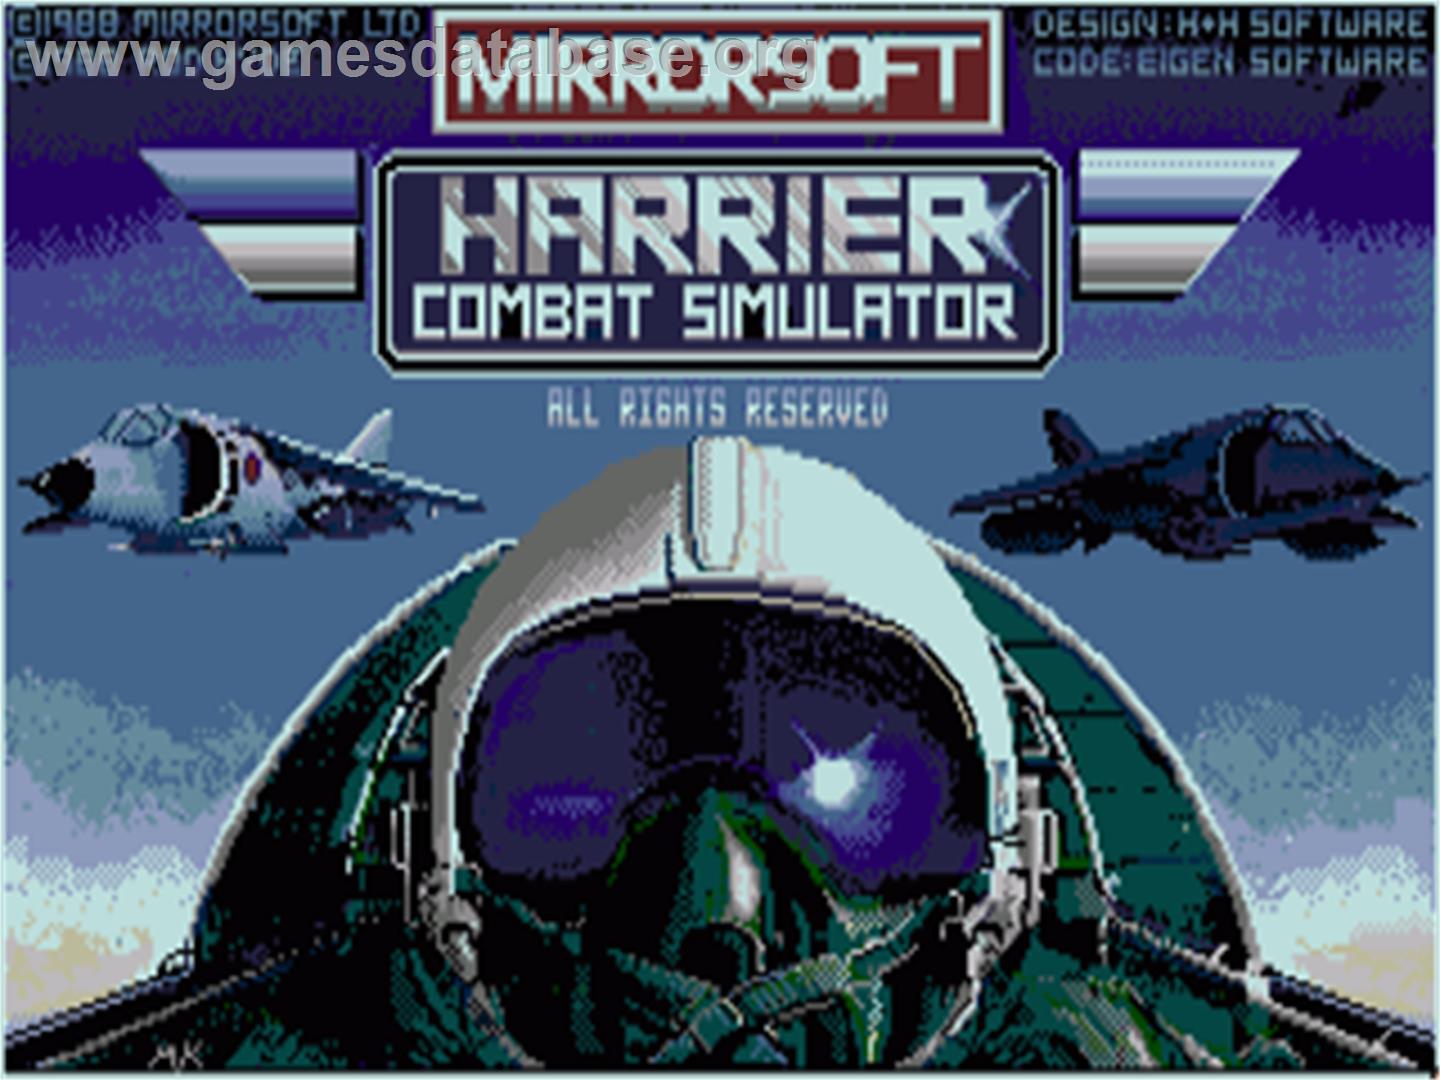 Harrier Combat Simulator - Commodore Amiga - Artwork - Title Screen